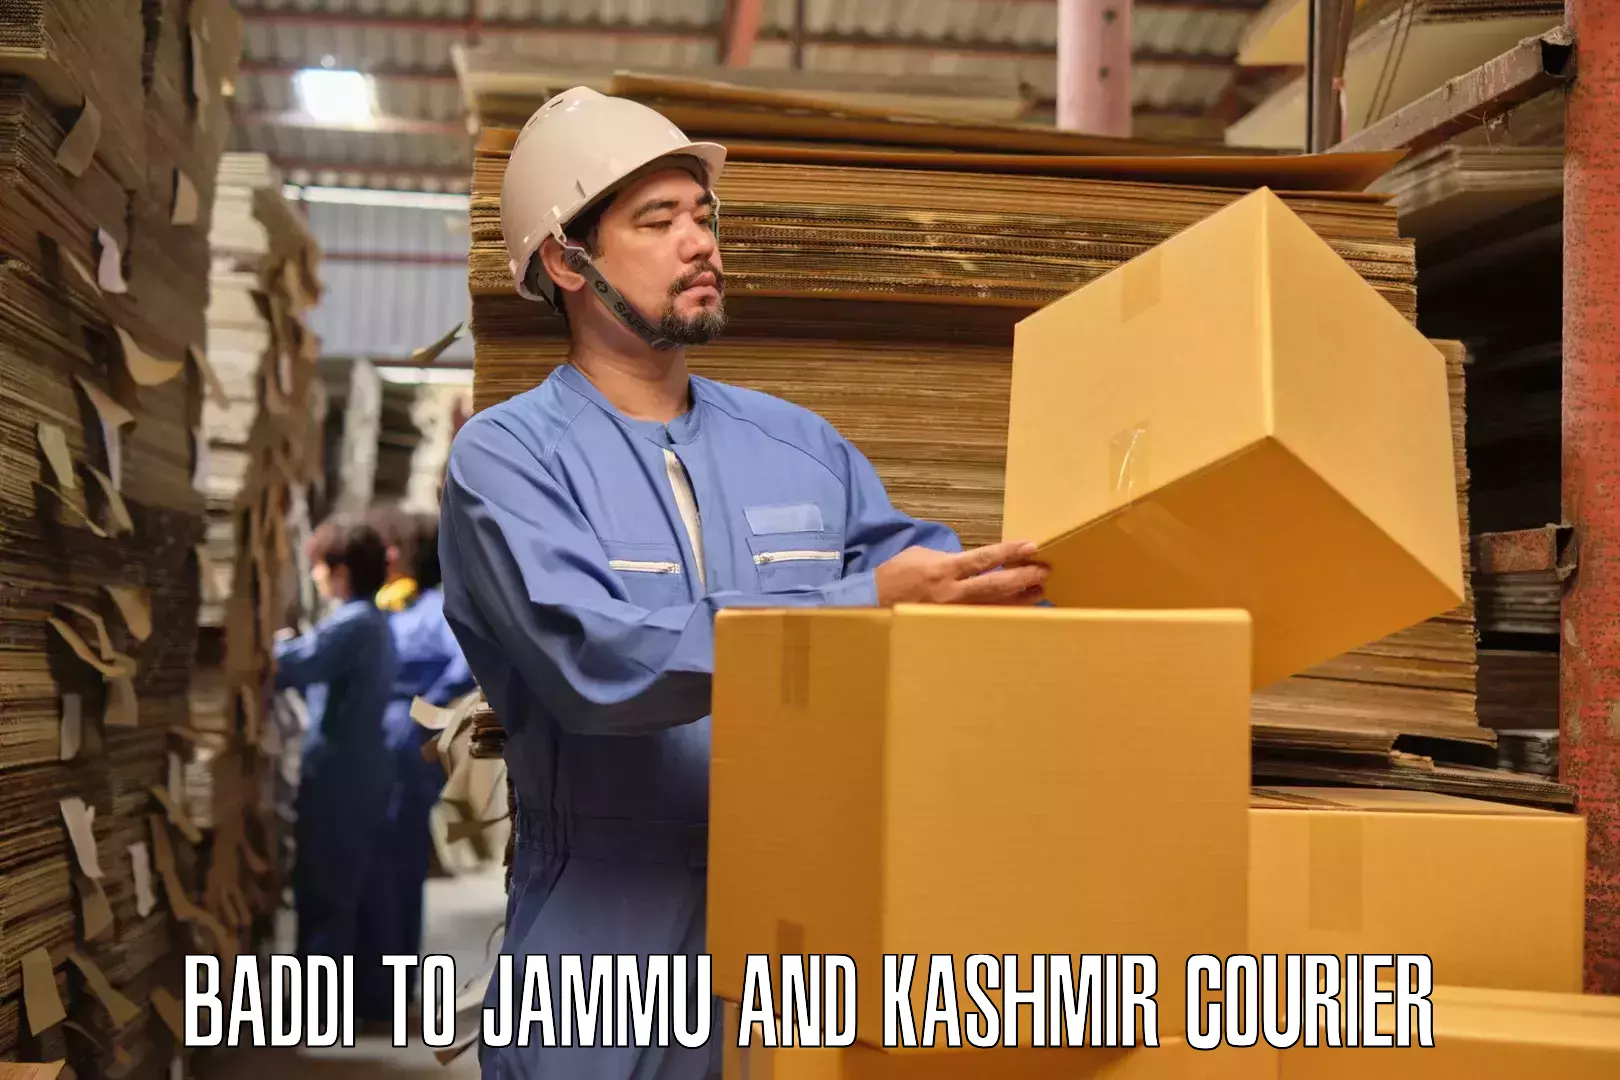 Specialized moving company Baddi to Jammu and Kashmir